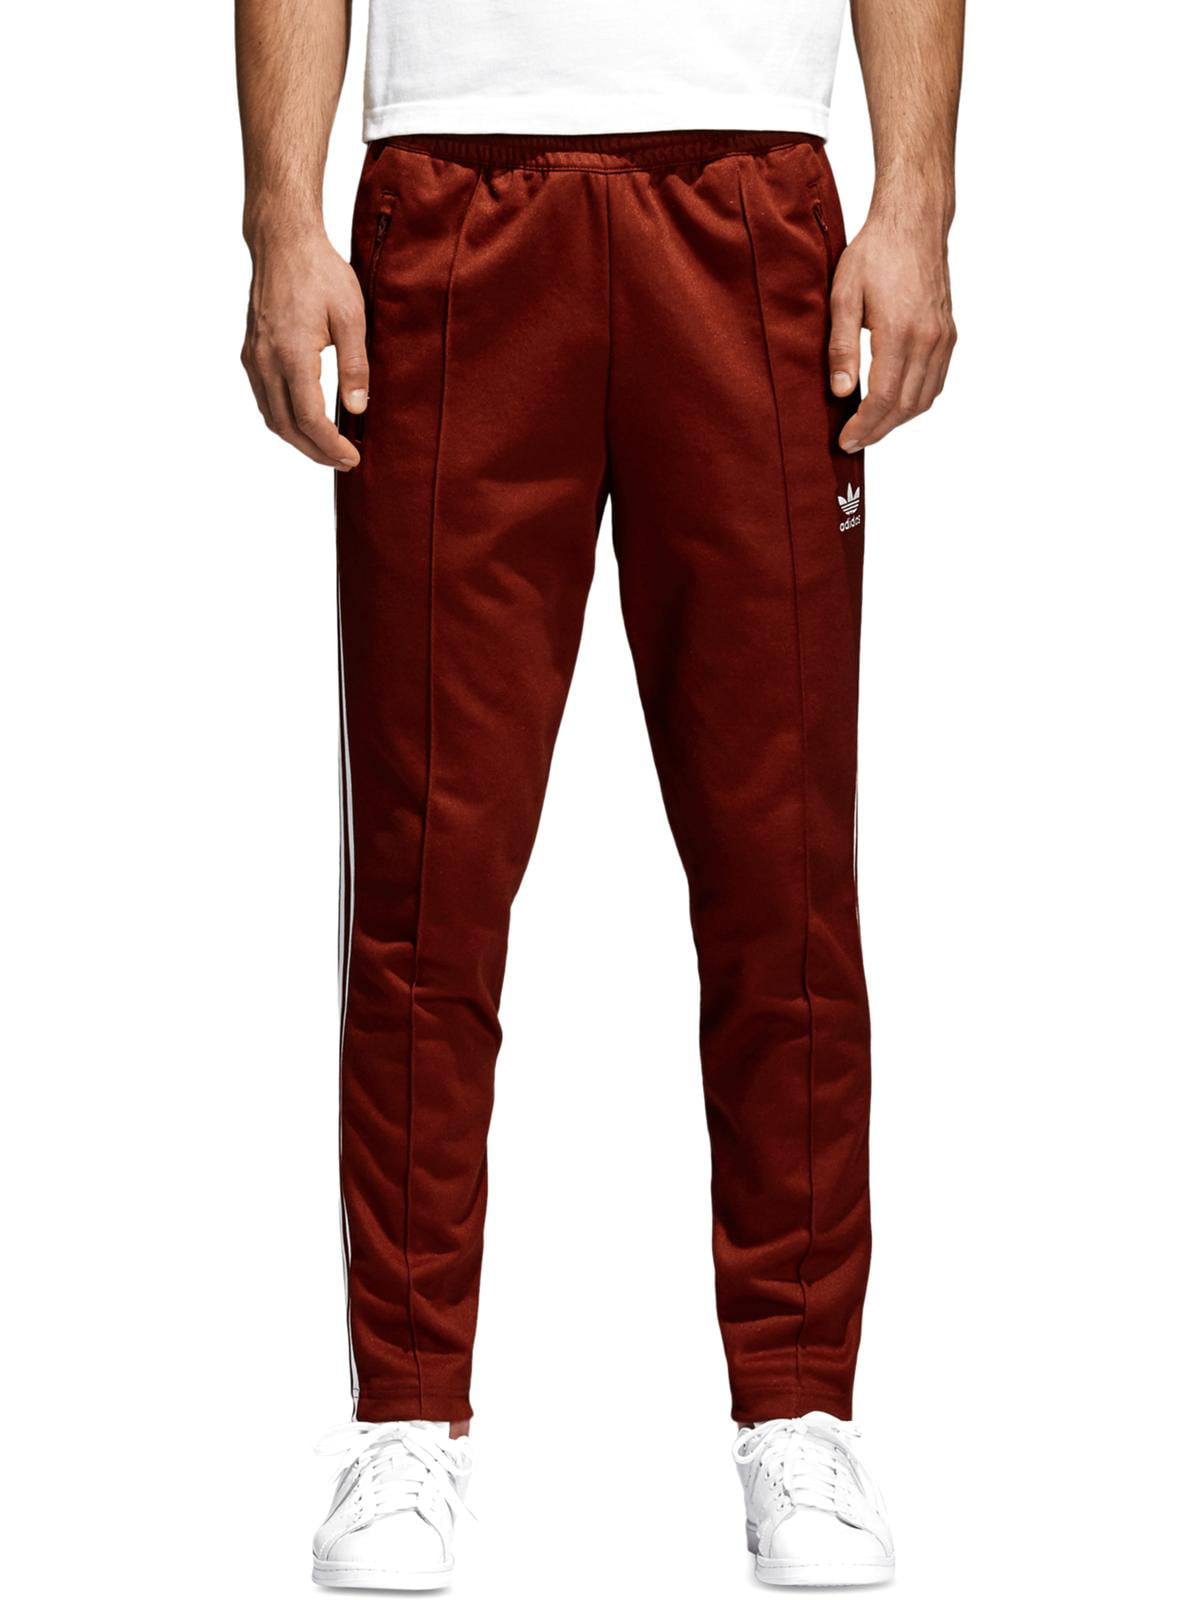 adidas beckenbauer pants red